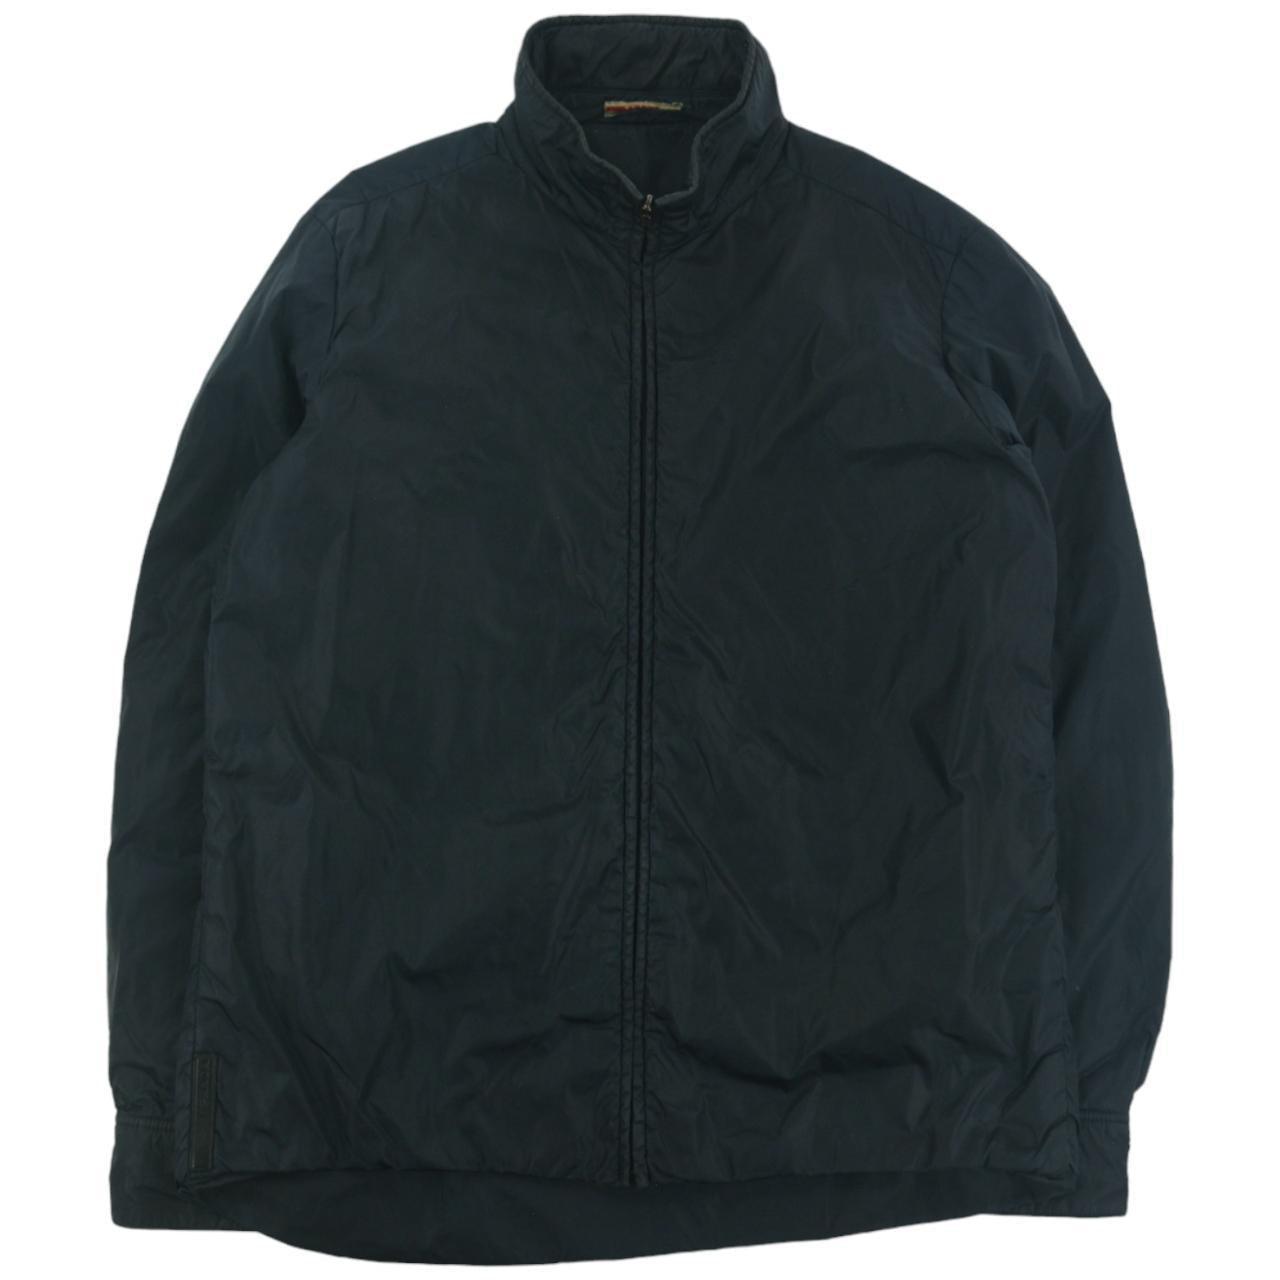 Vintage Prada Sport Jacket Size XL - Known Source